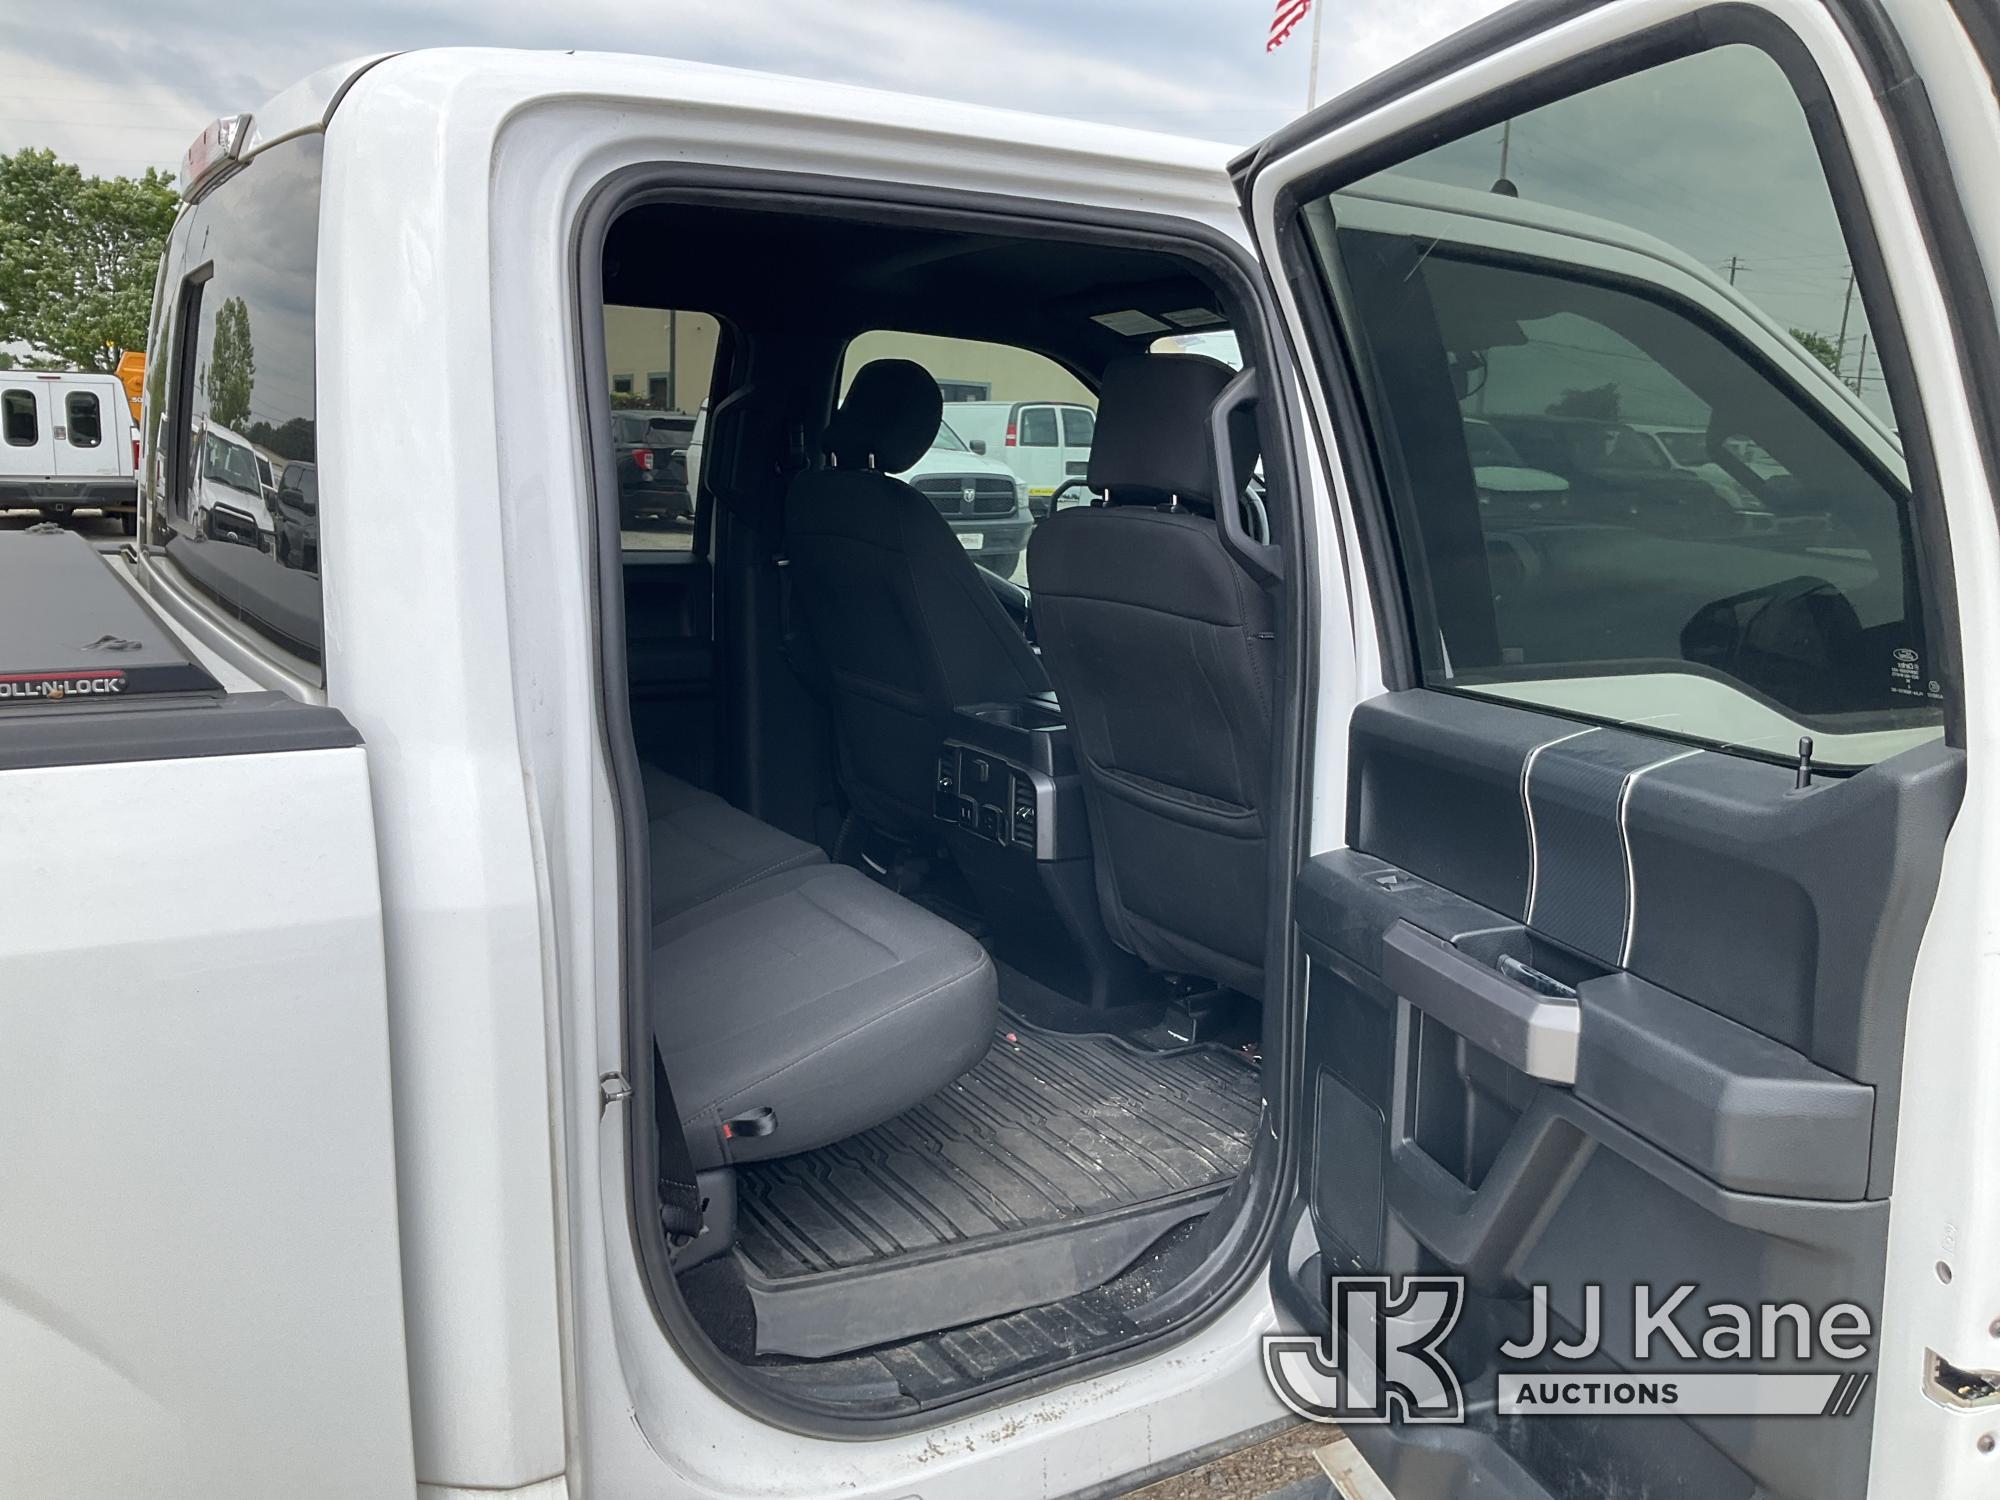 (Villa Rica, GA) 2019 Ford F150 4x4 Crew-Cab Pickup Truck Runs & Moves) (Check Engine Light On